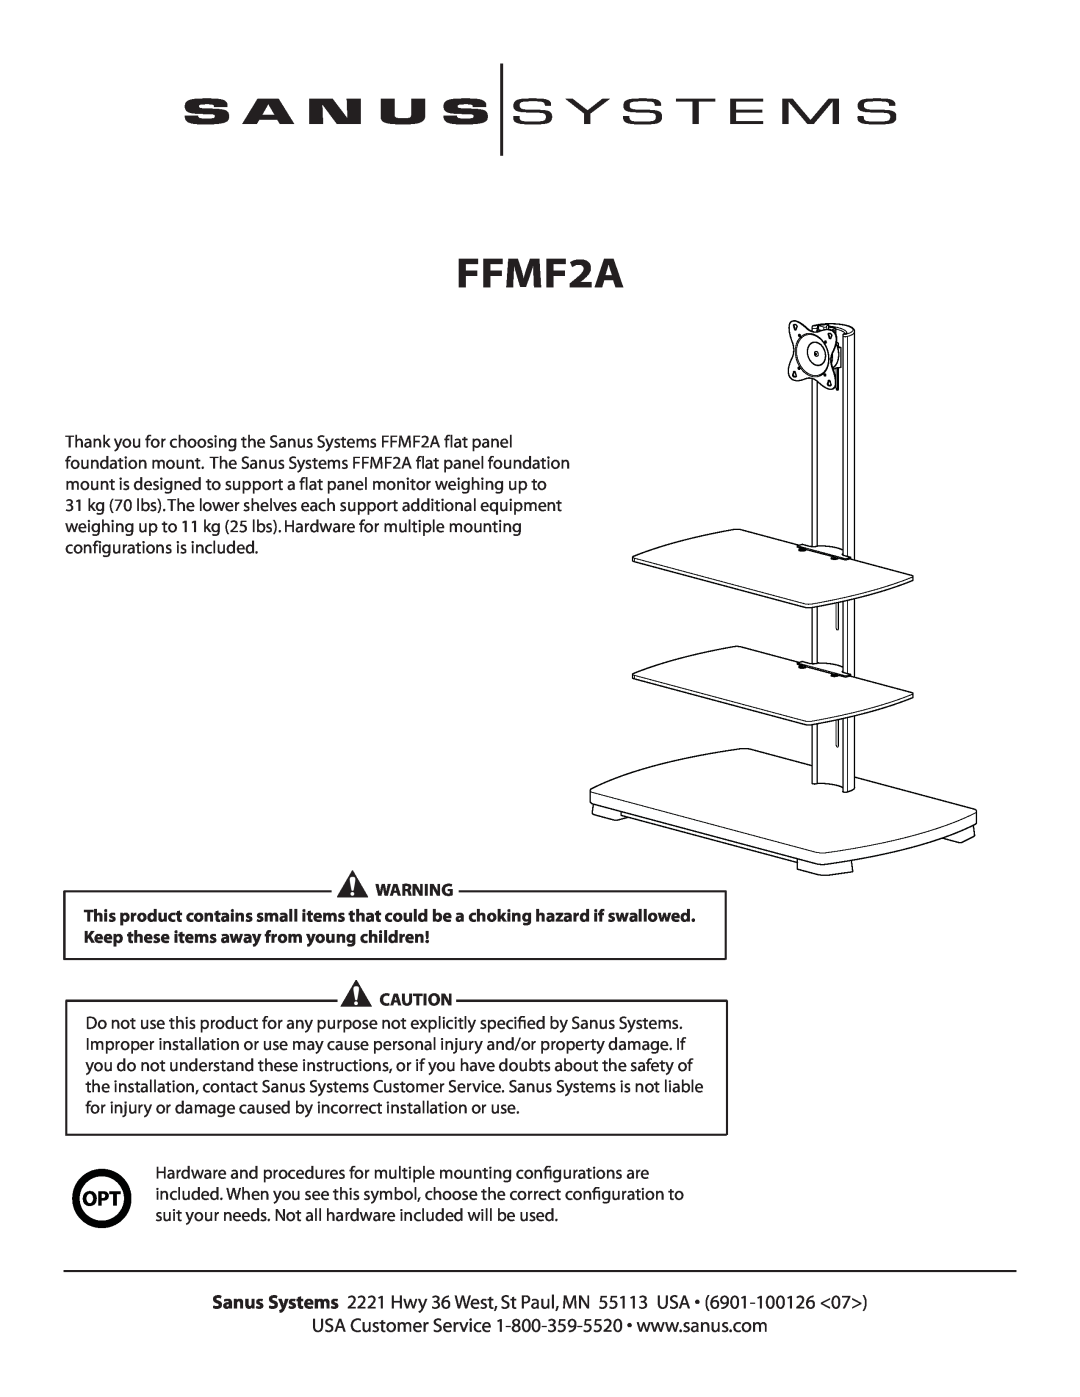 Sanus Systems FFMF2A manual 